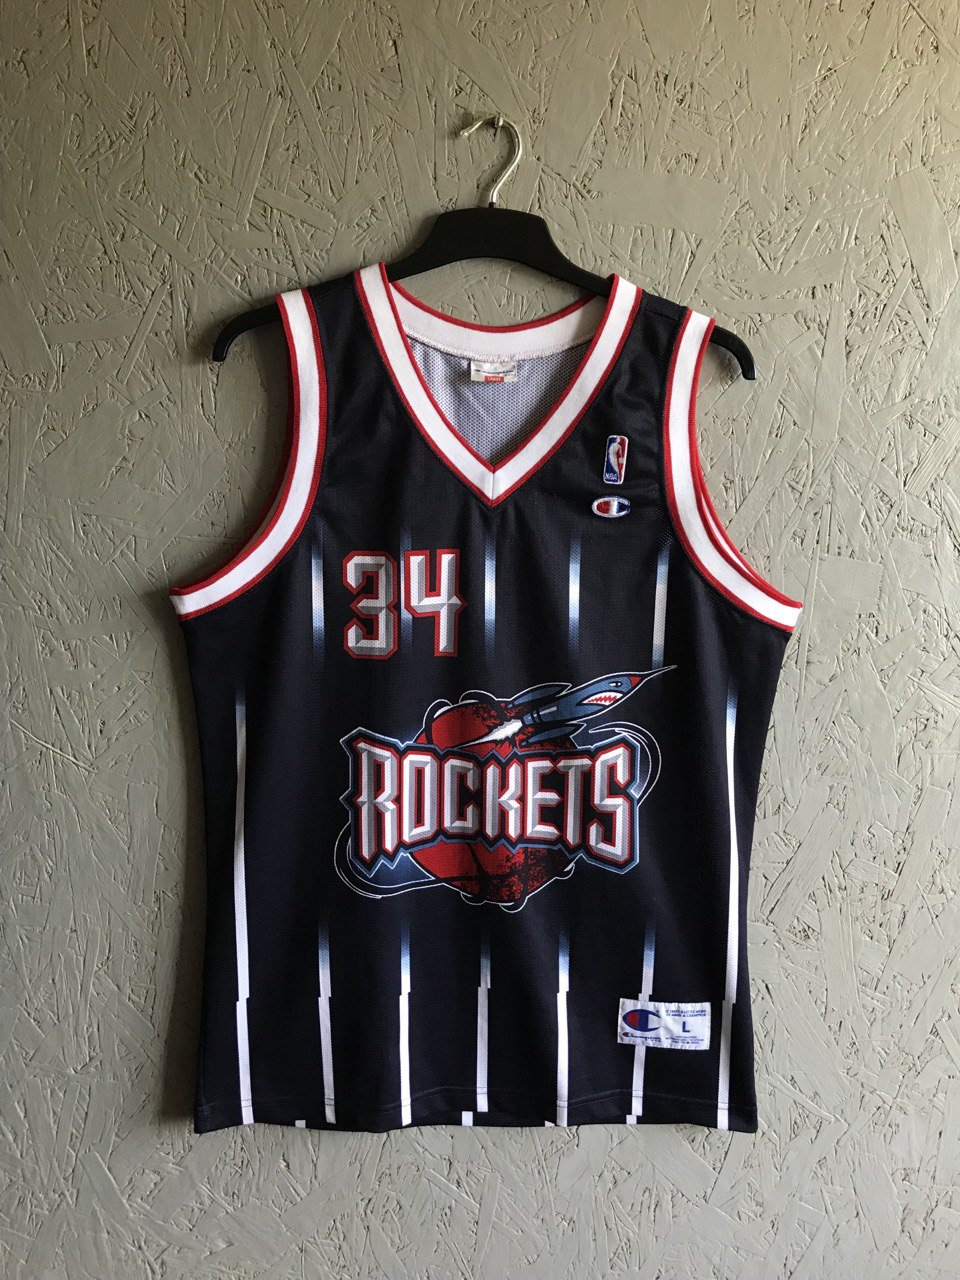 VTG 90s Robert Horry Houston Rockets Champions Jersey Size 48 XL